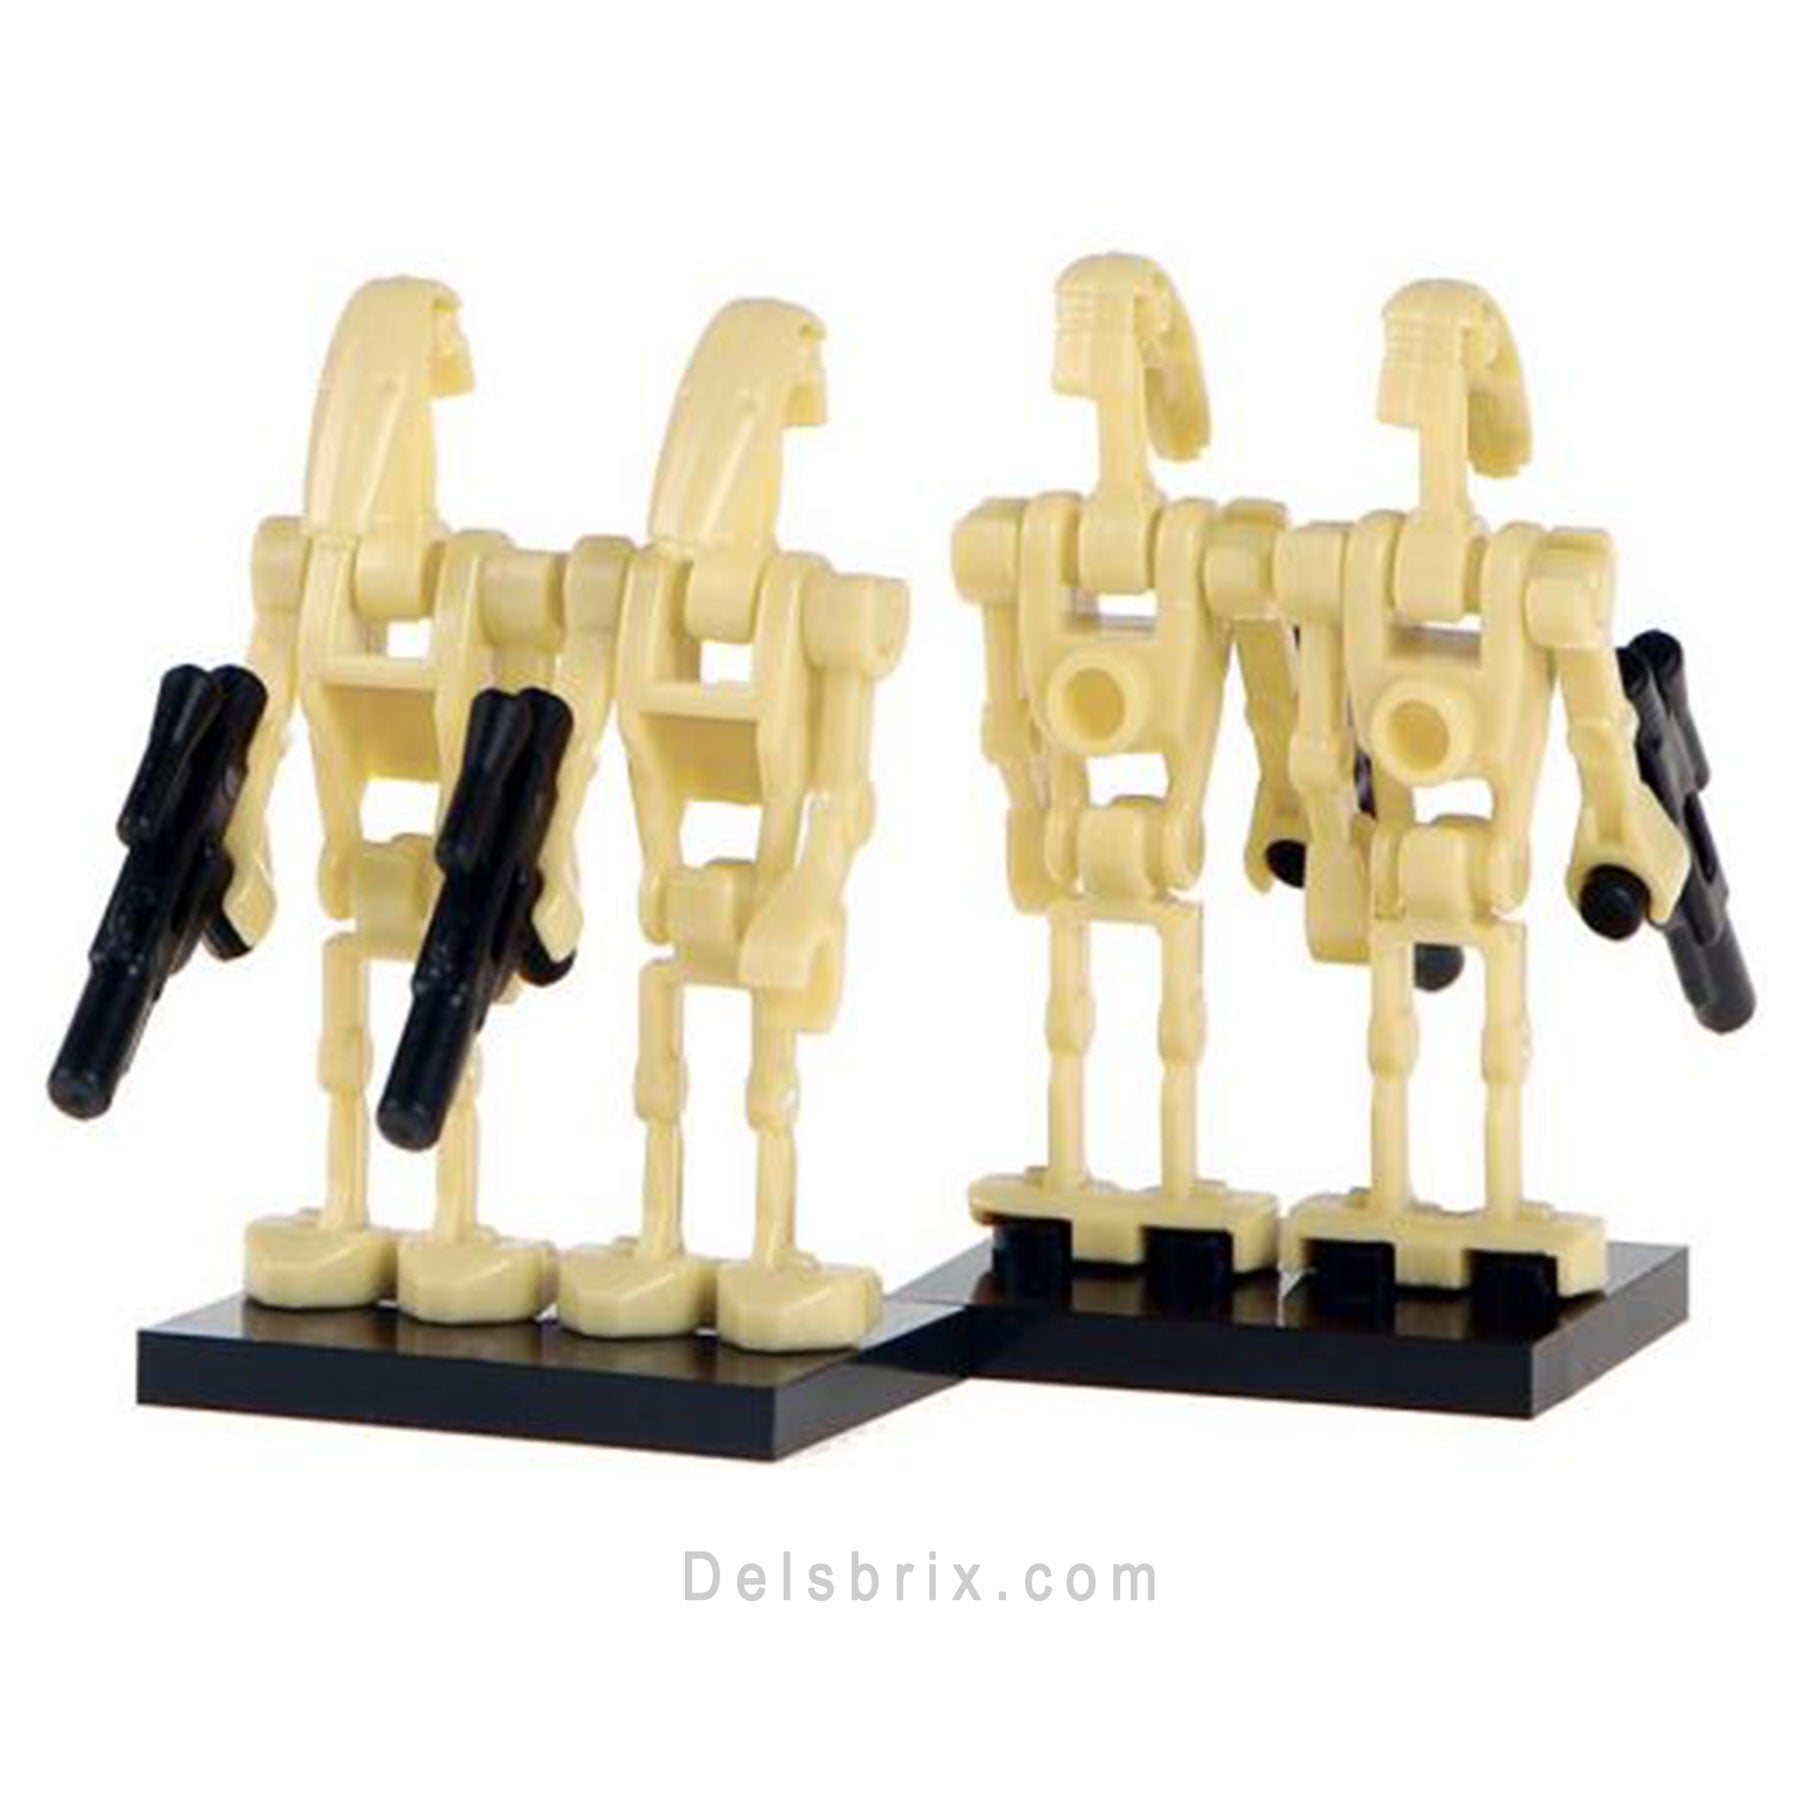 Battle Droids Lego Star wars Minifigures Delsbricks.com   